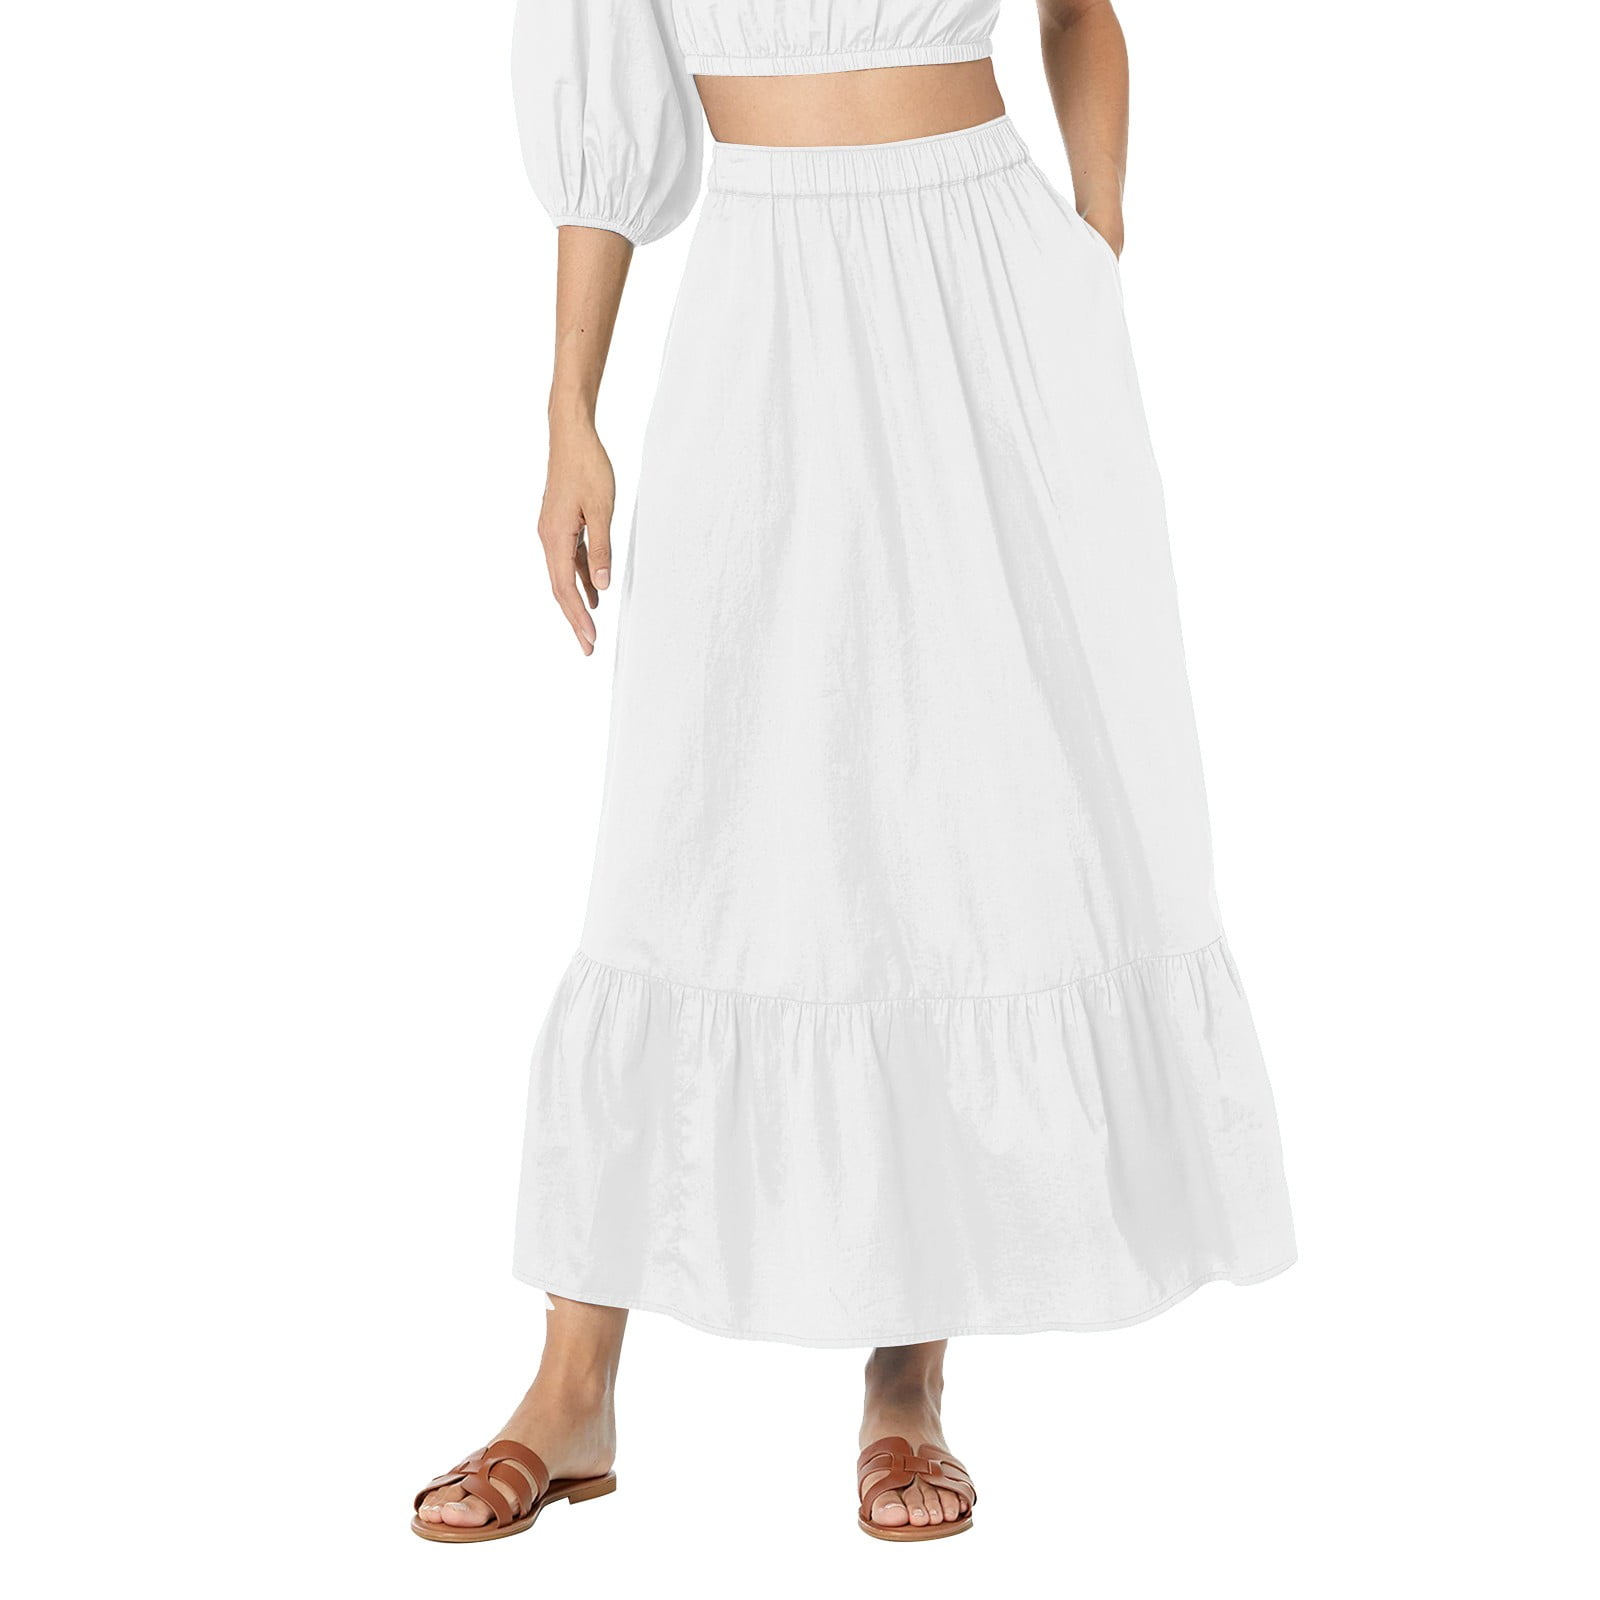 Womens Skirts,Women's High Waist Fold Over Pocket Shirring Skirt(M,White) -  Walmart.com